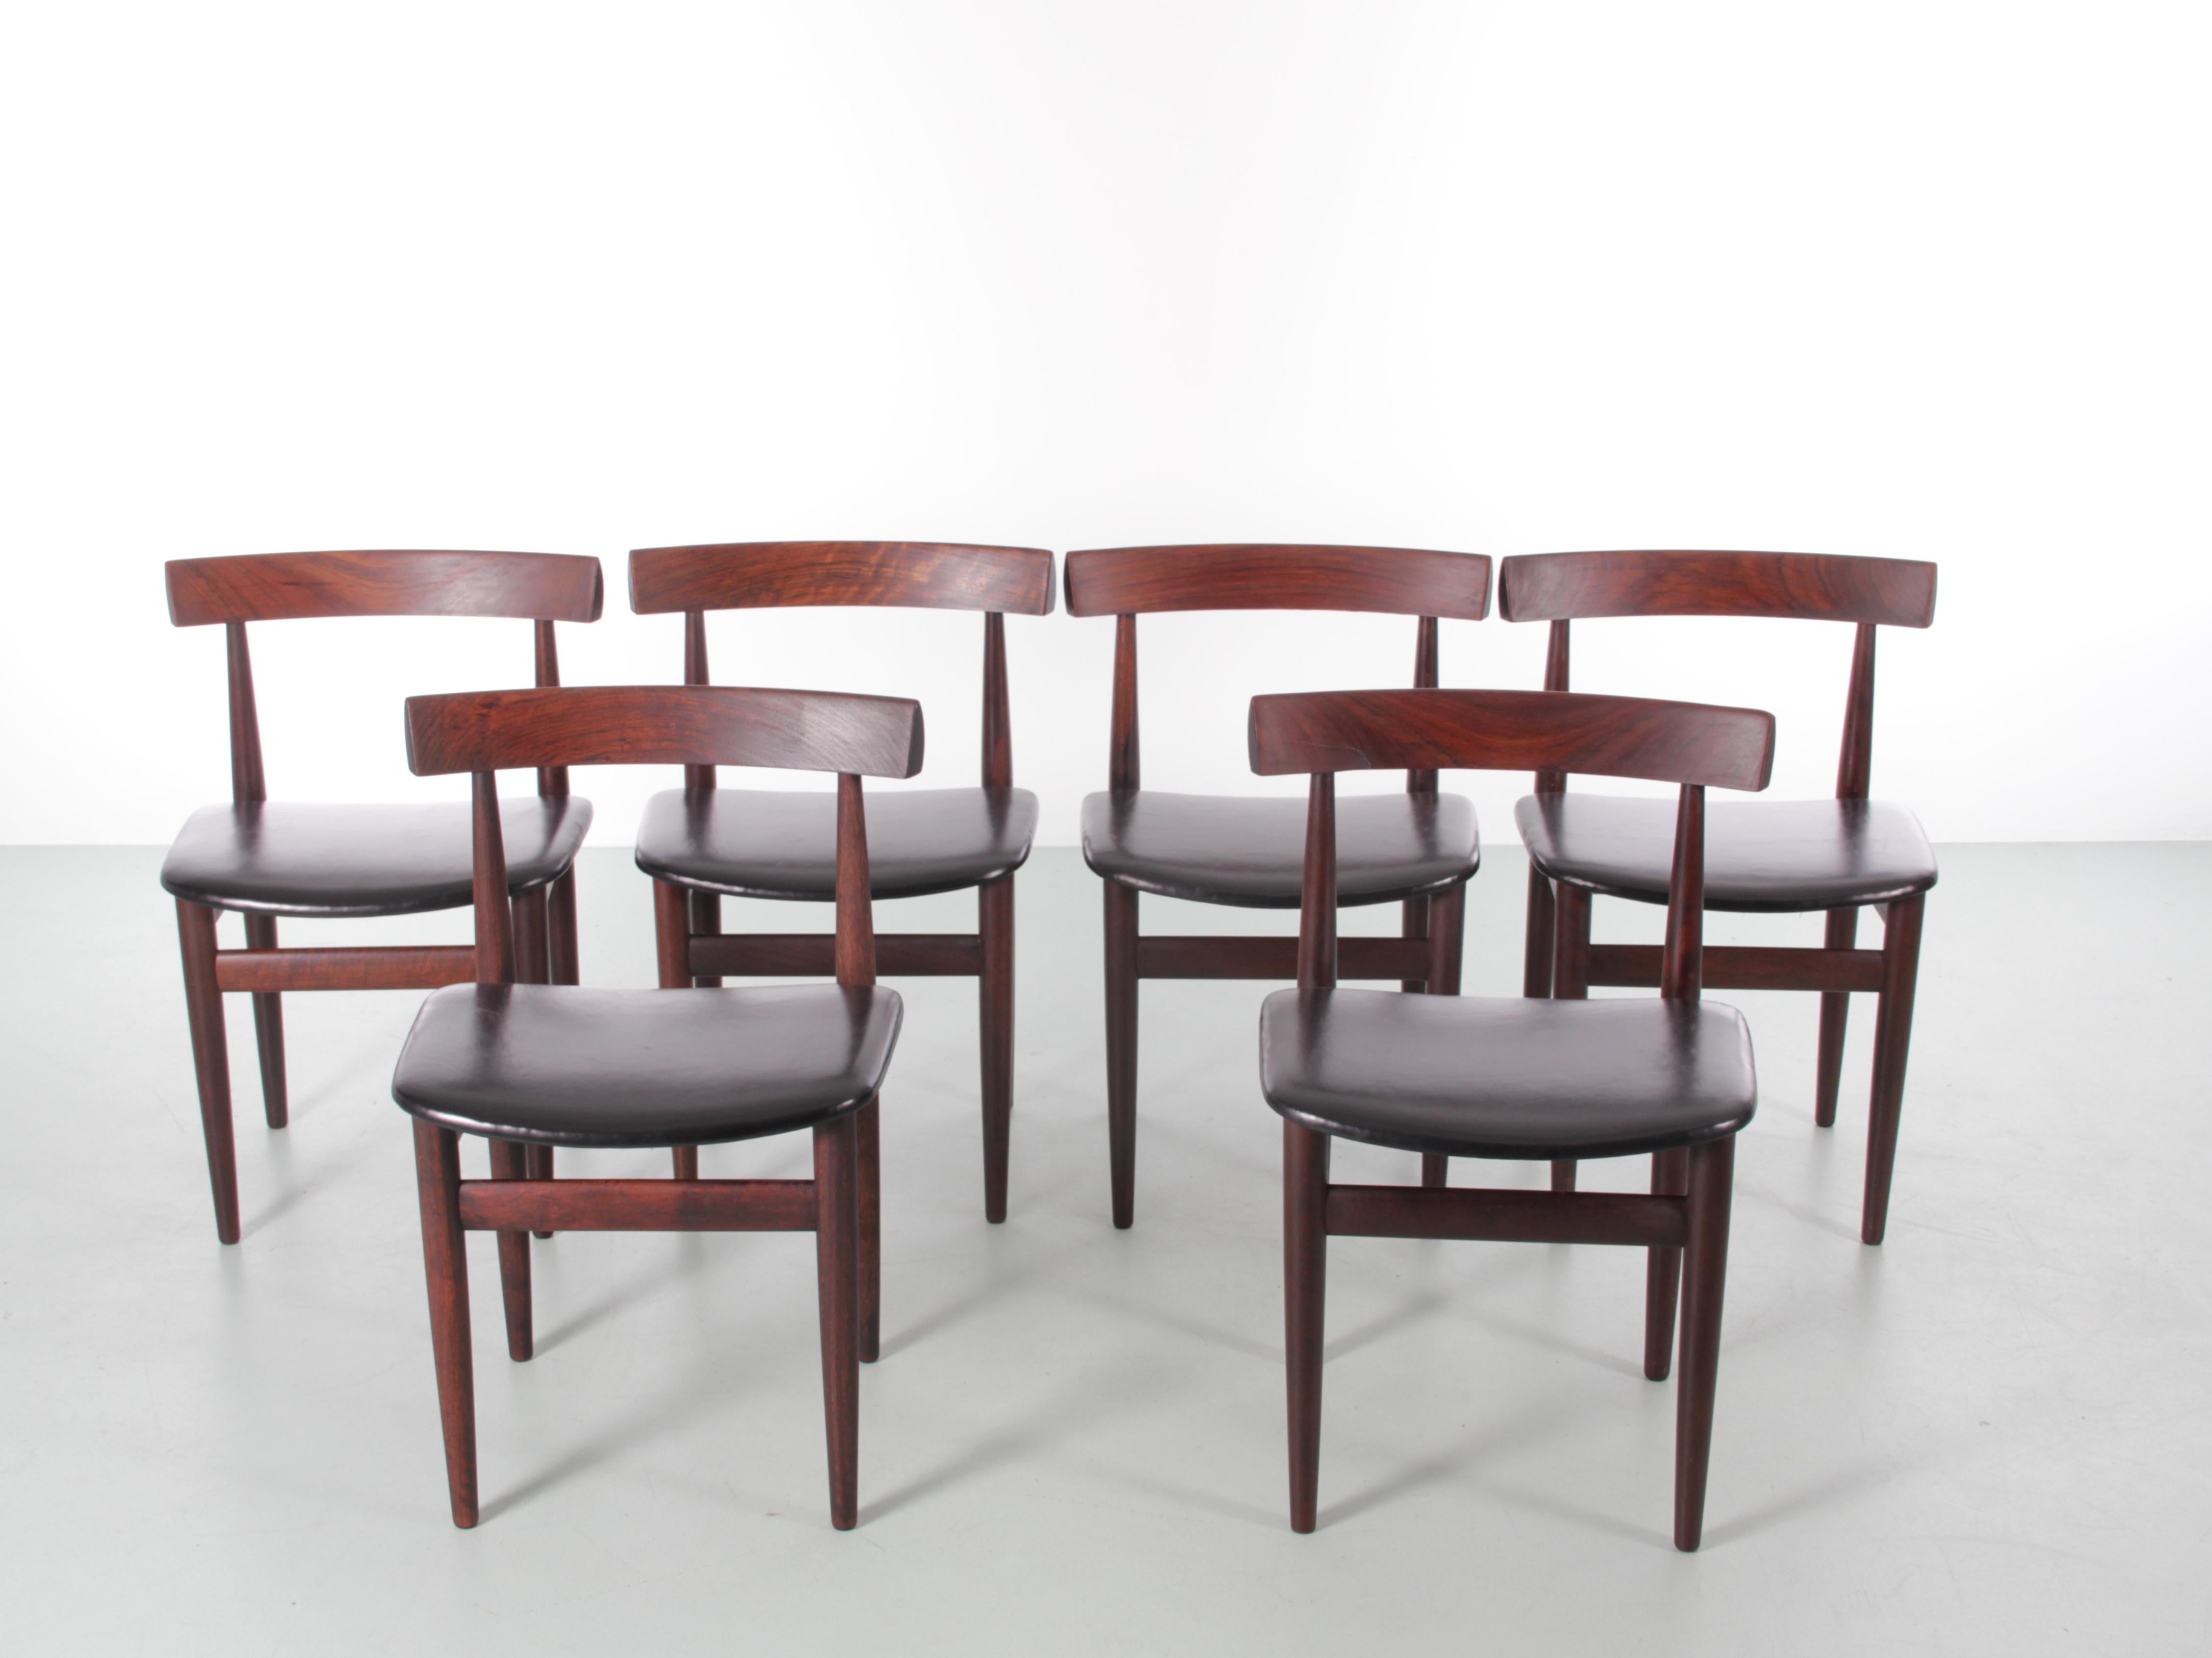 Scandinavian Modern Mid-Century Modern Scandinavian Dining Set in Rosewood by Olsen with 6 Chairs